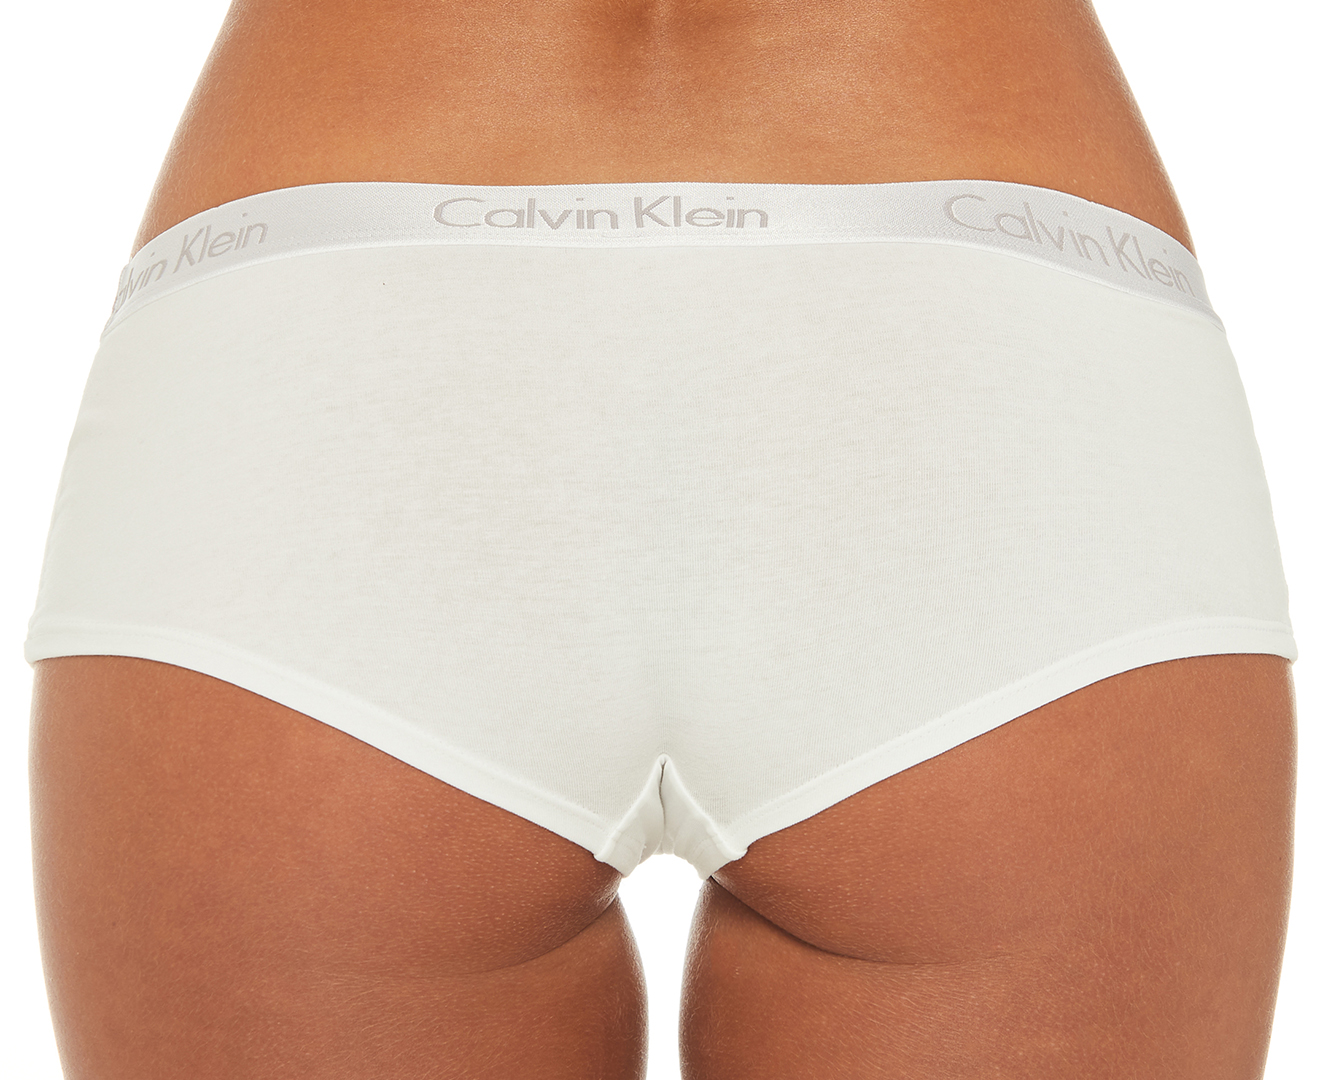 Calvin Klein Women's Motive Cotton Boyshorts 3-Pack - Black/White